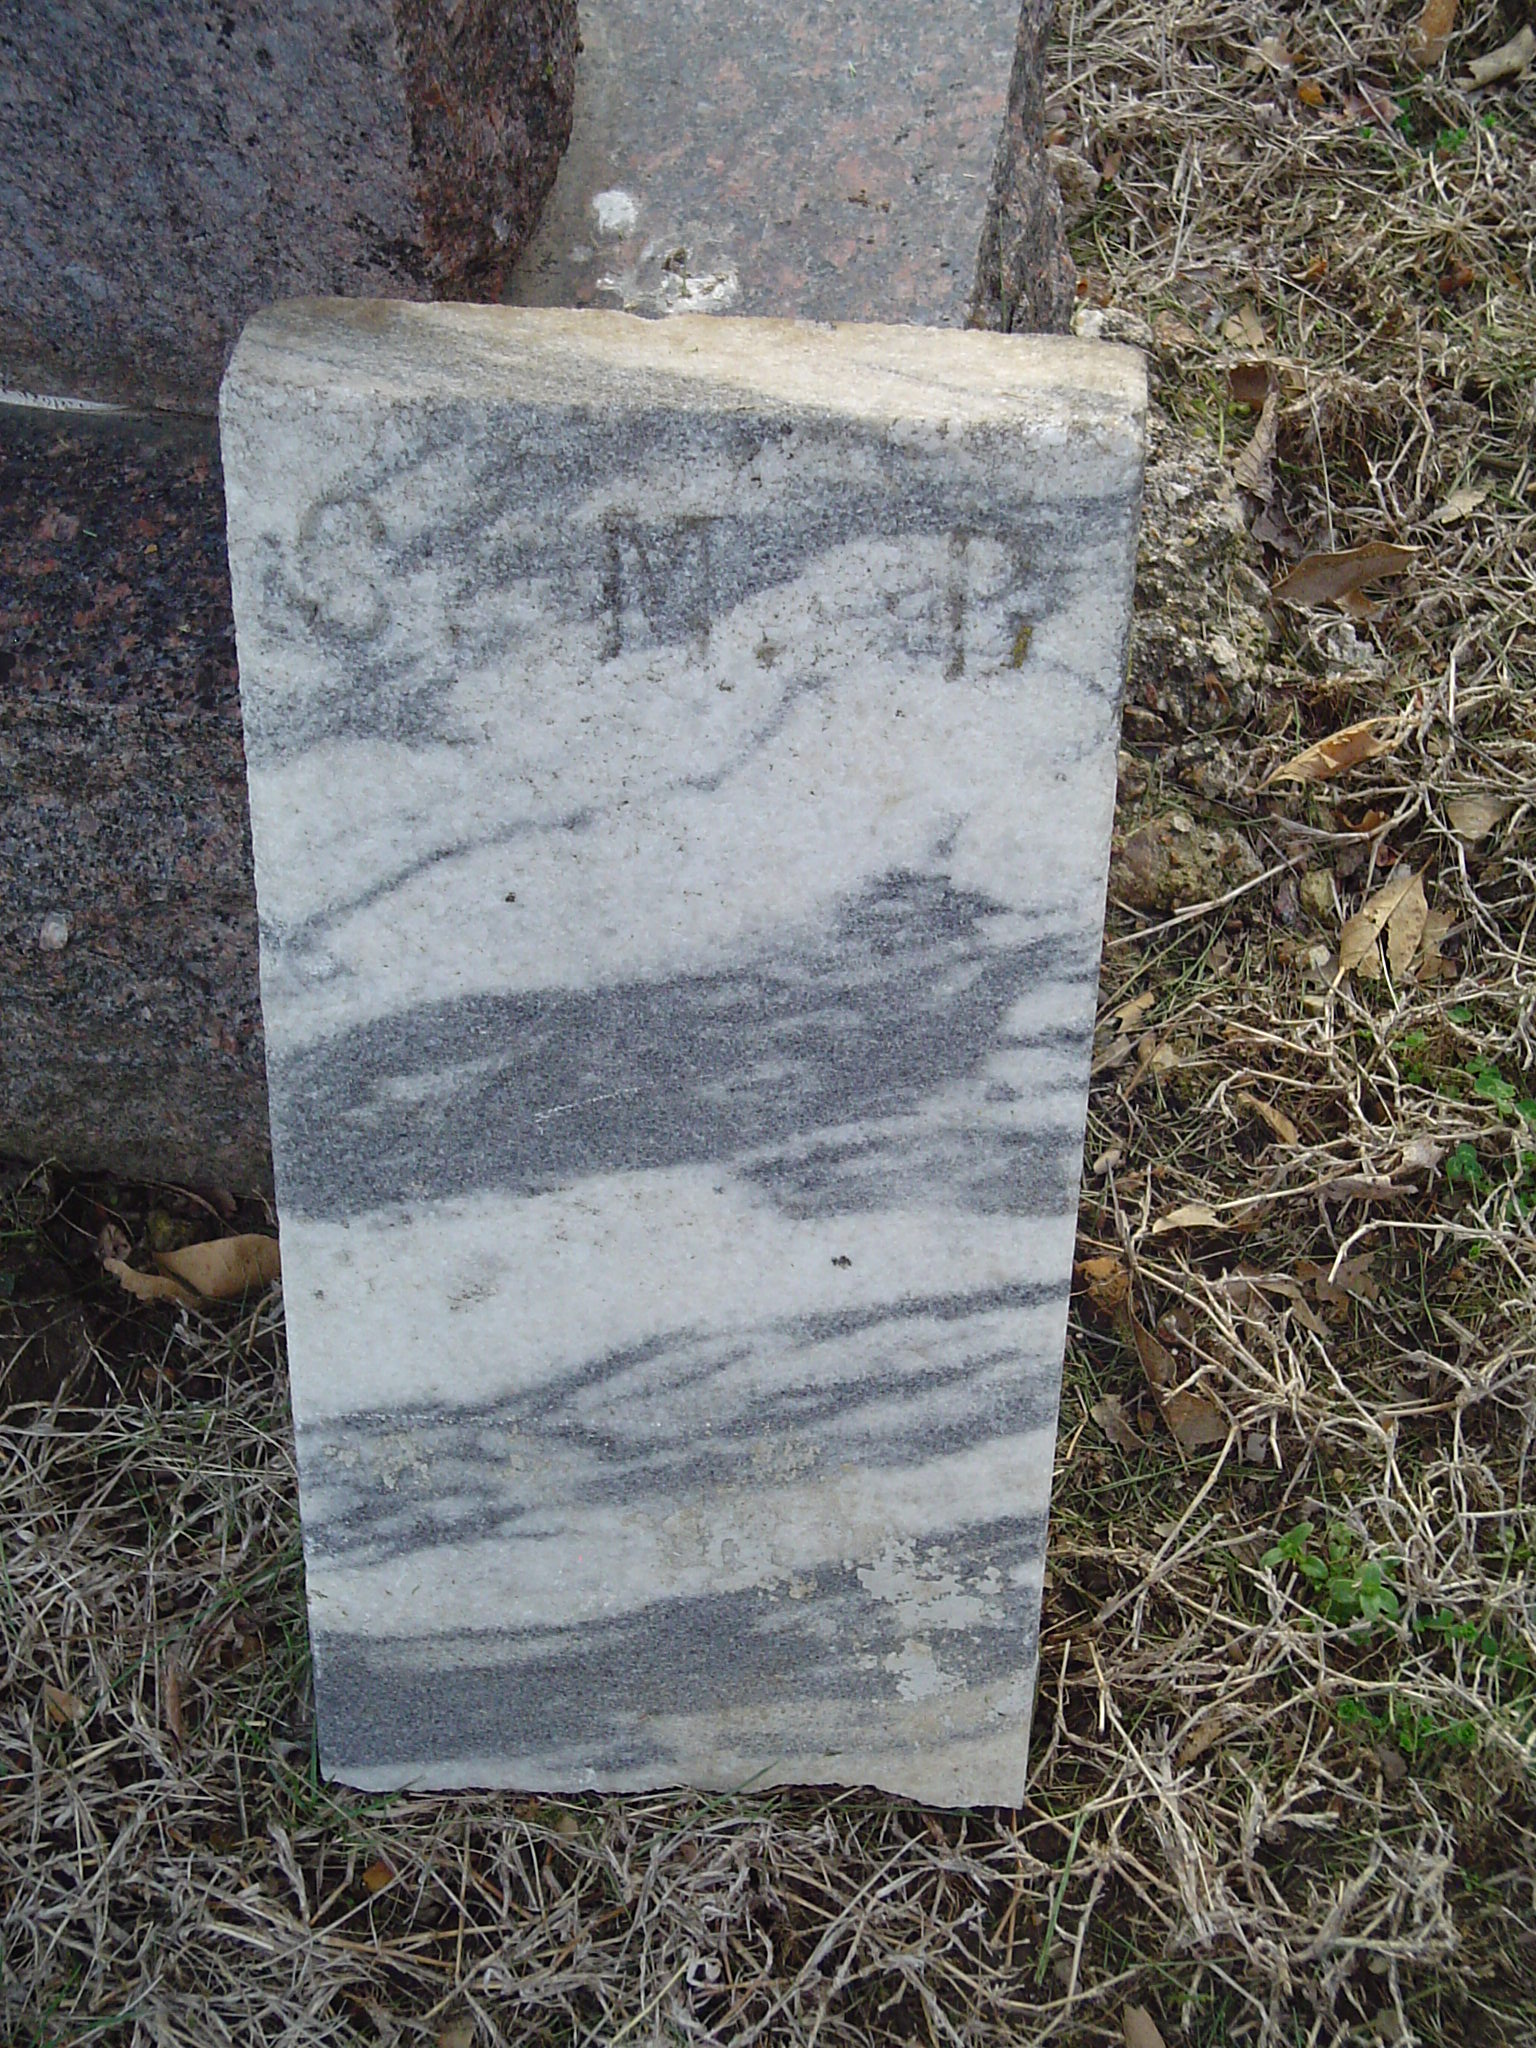 Tipton Odd Fellows cemetery listings1536 x 2048